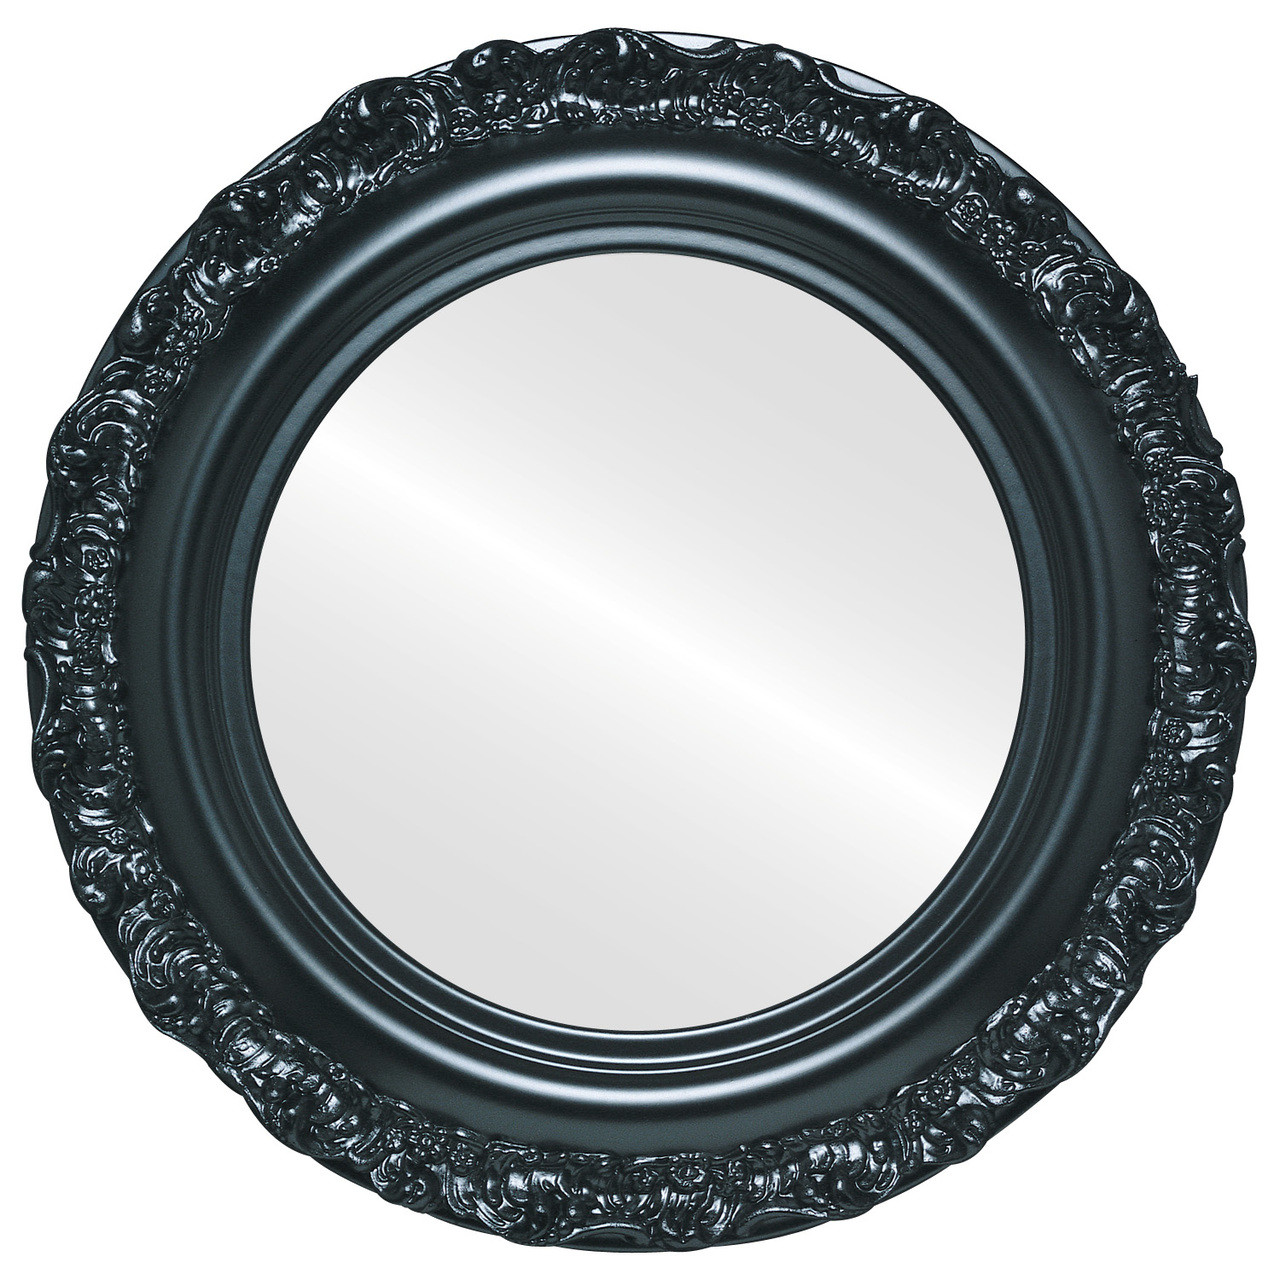 Black Mirrors, Round & Framed Black Mirrors